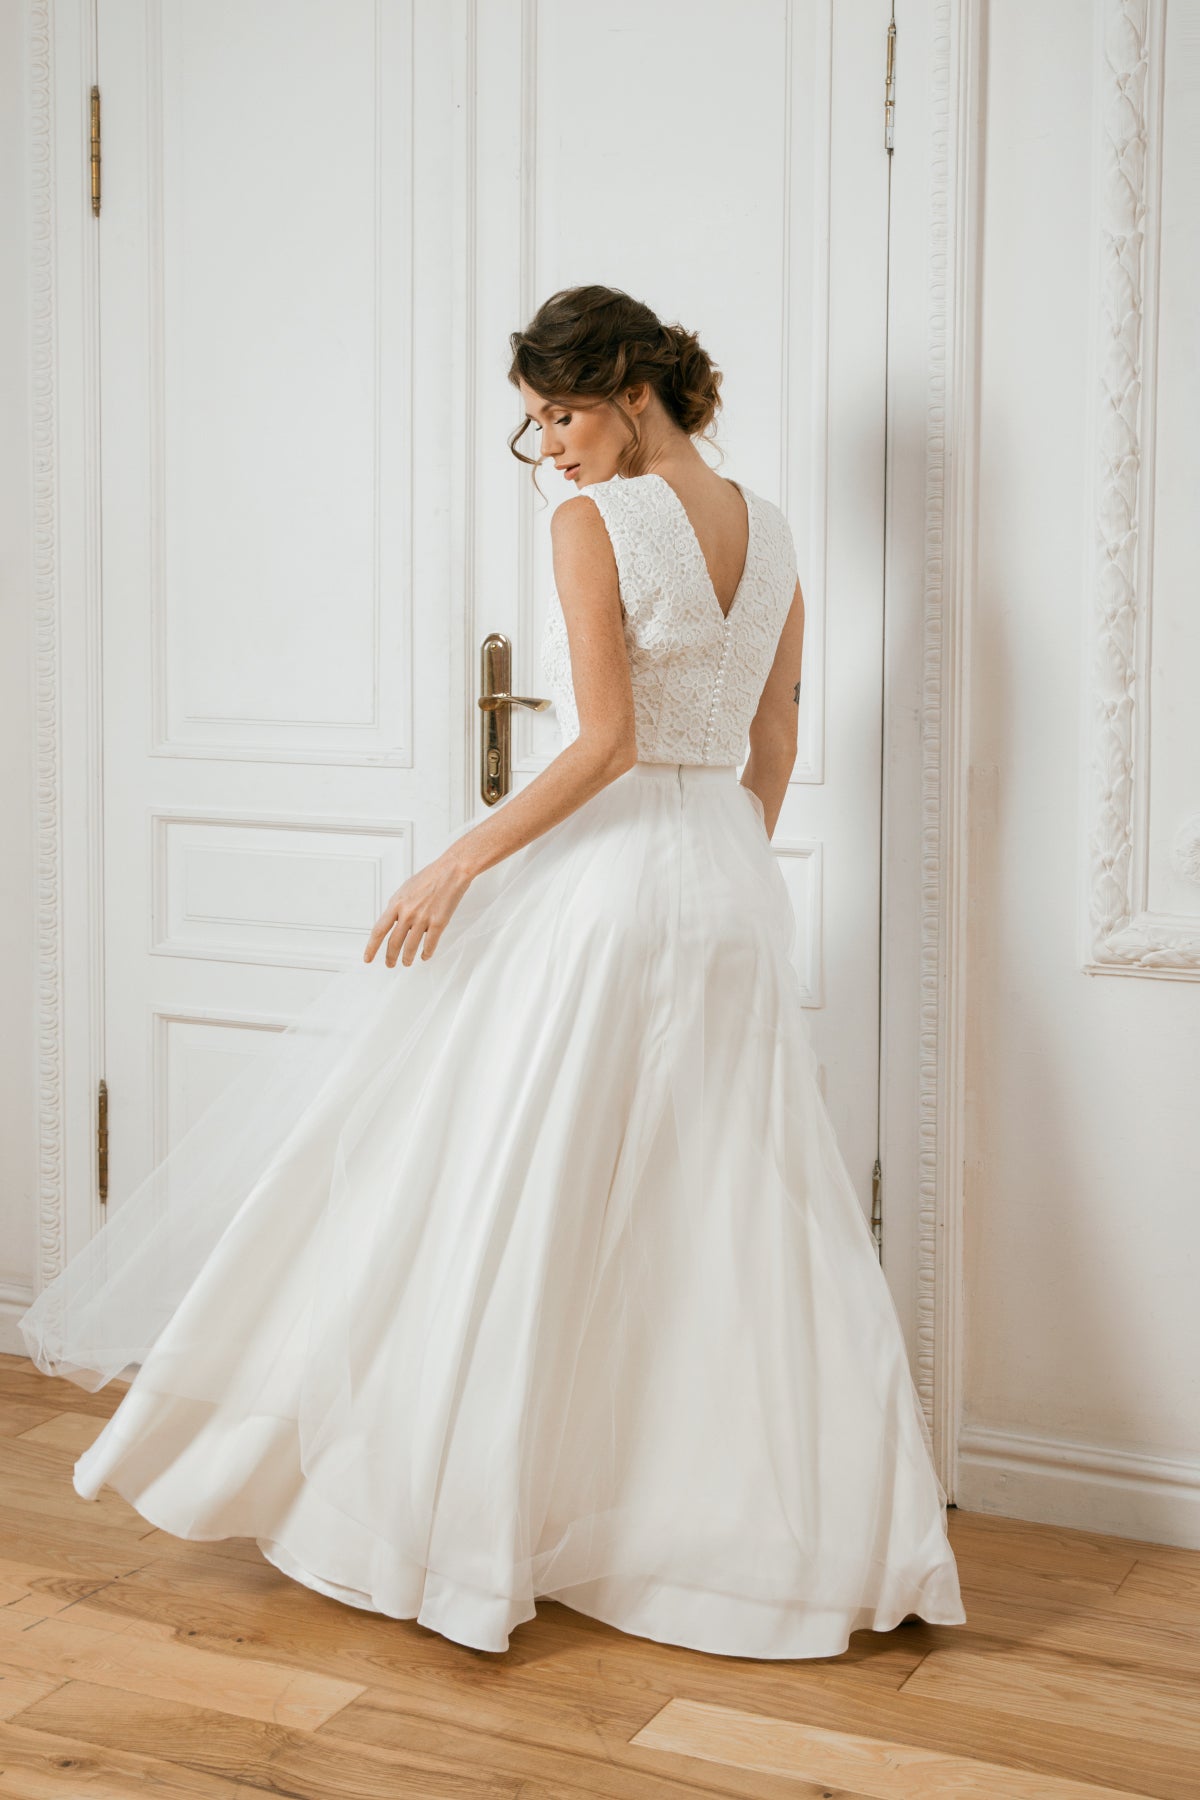 Two Piece Wedding Dress, Bridal Lace Top, White Separates, Boho